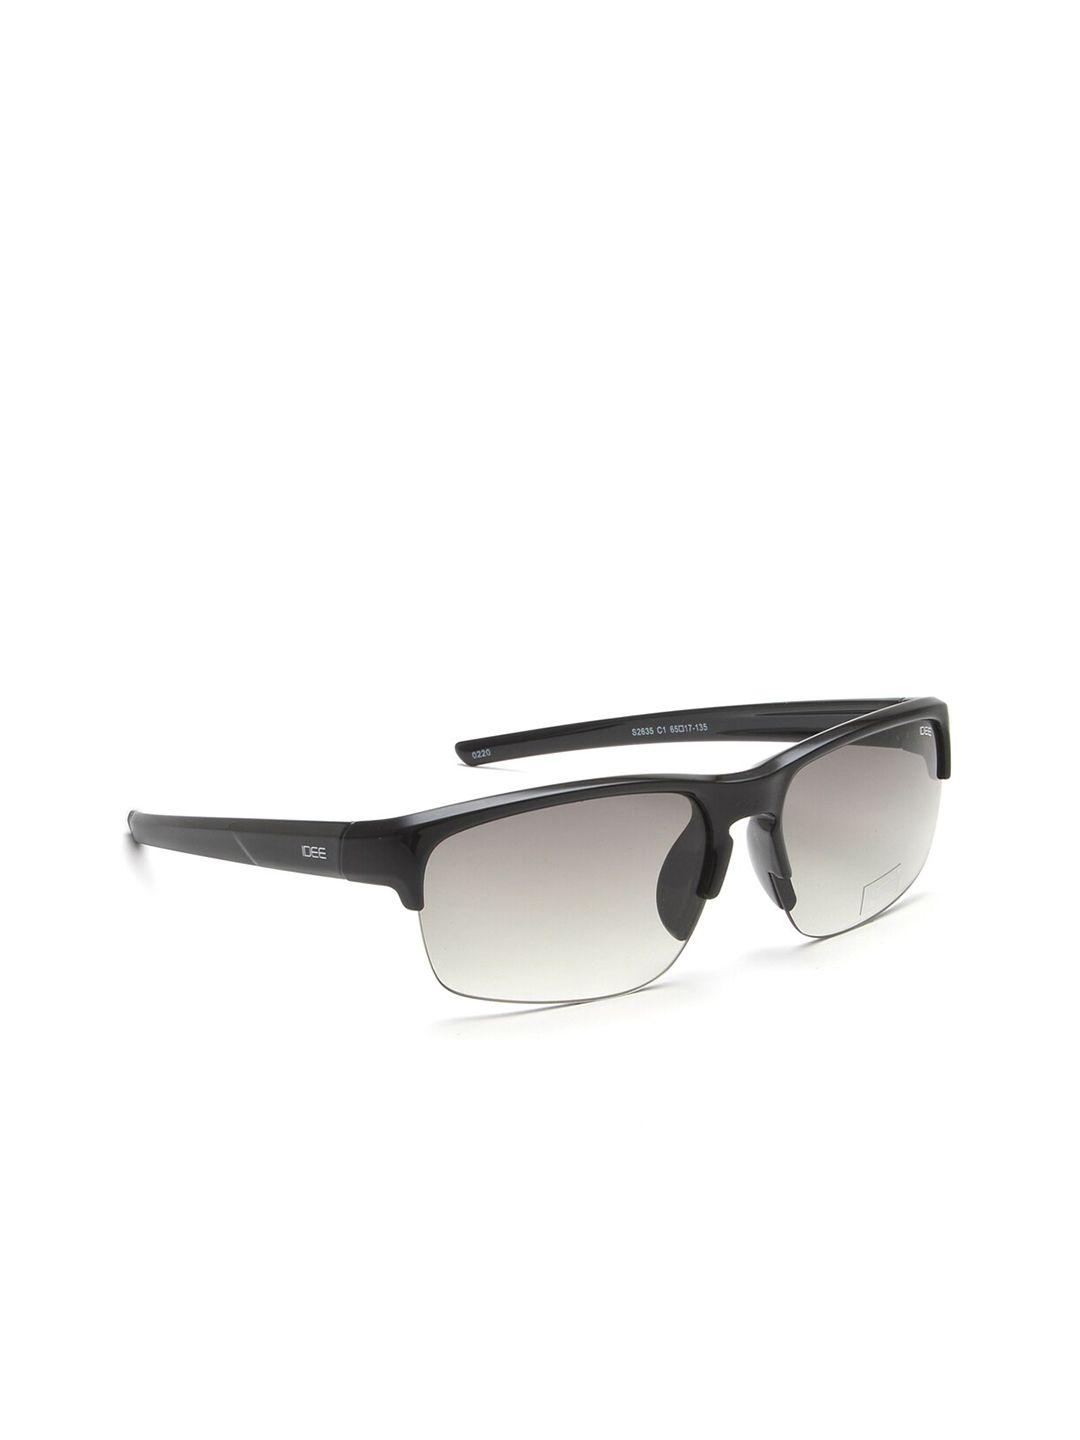 idee men grey lens & black sports sunglasses with polarised lens